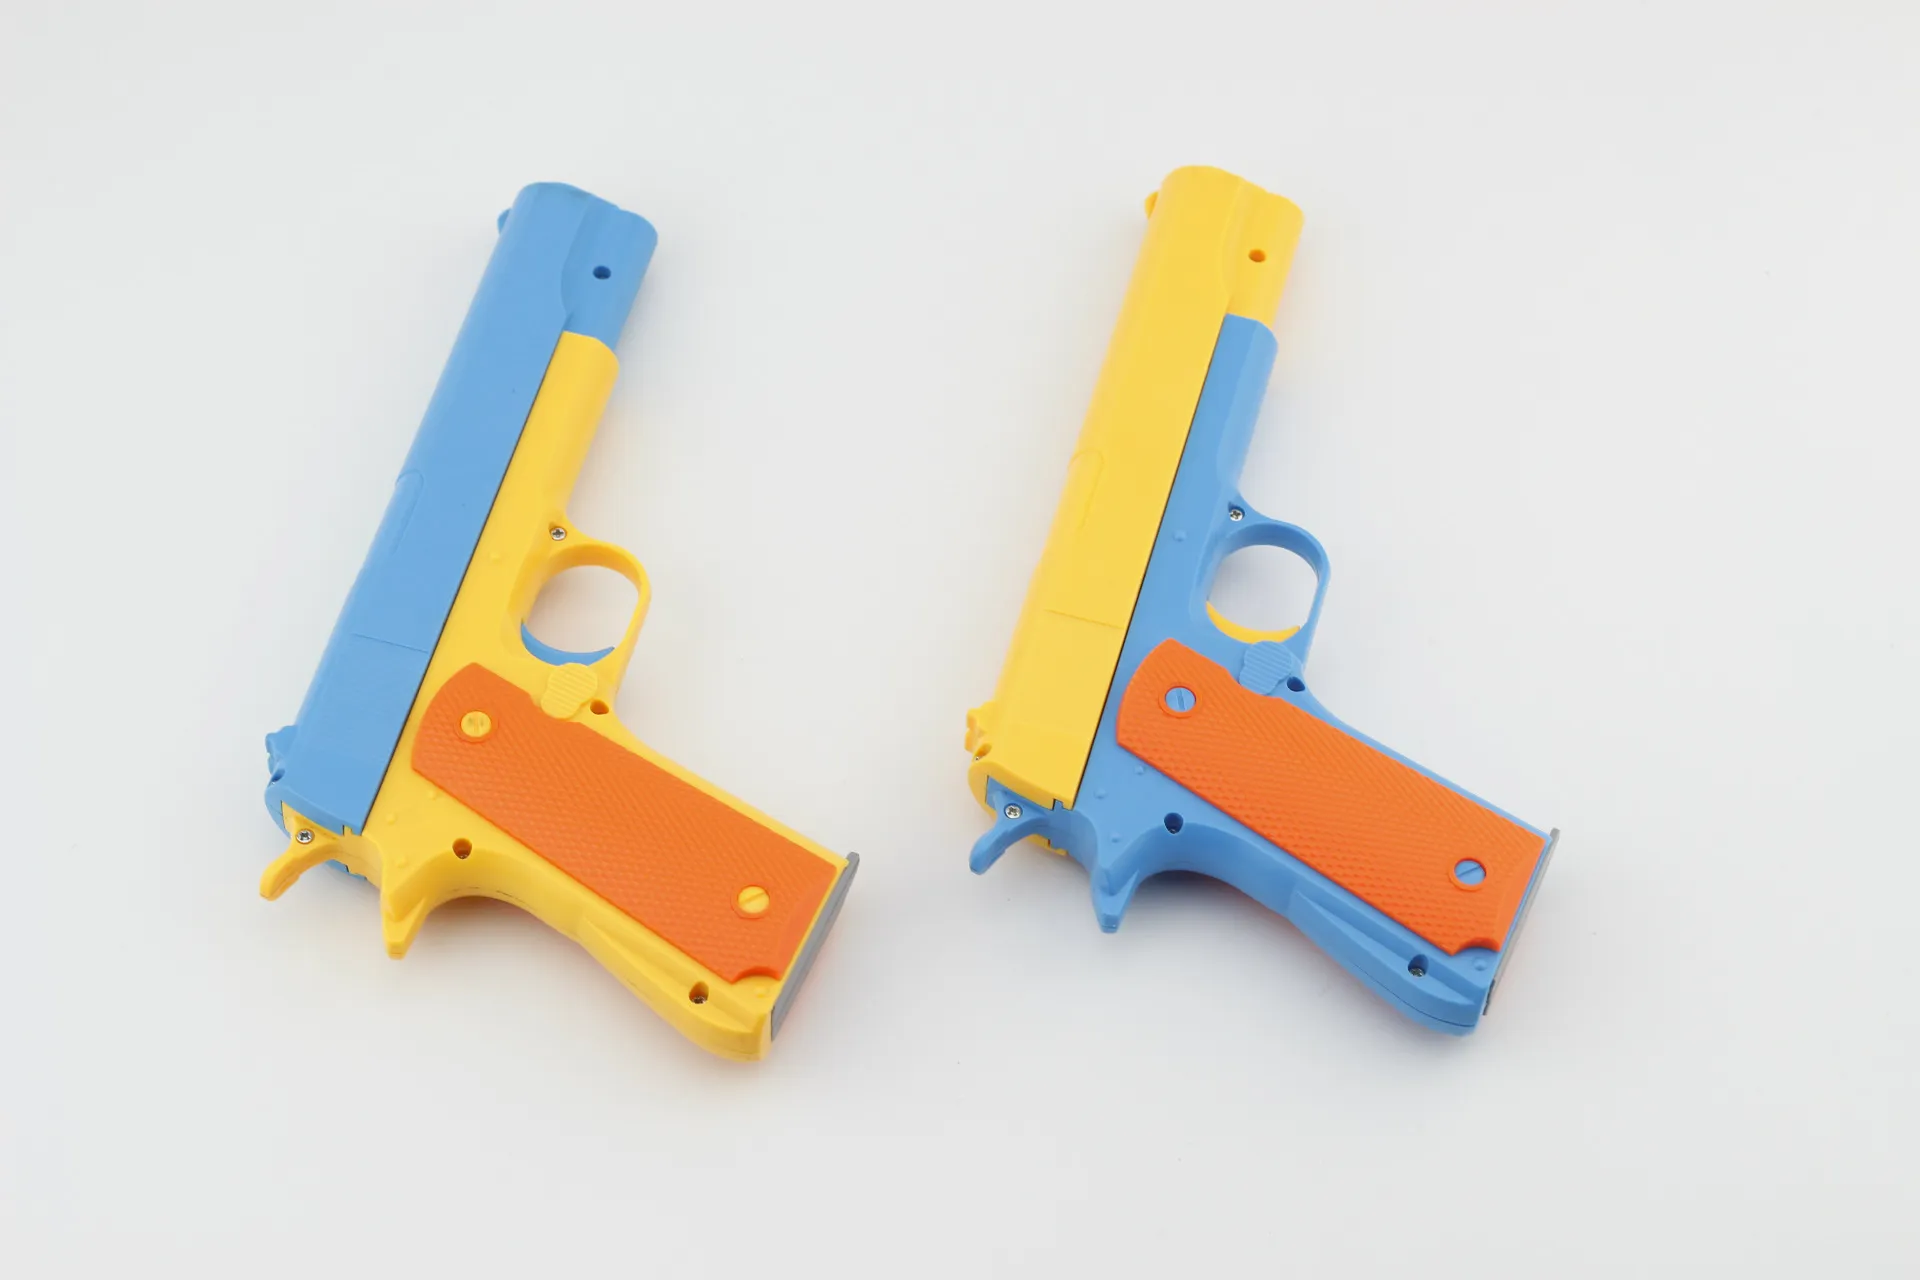 M1911 Armas de brinquedo para meninos com manual macio manual tiro cor  pistola sniper plástico blaster modelo presente de aniversário